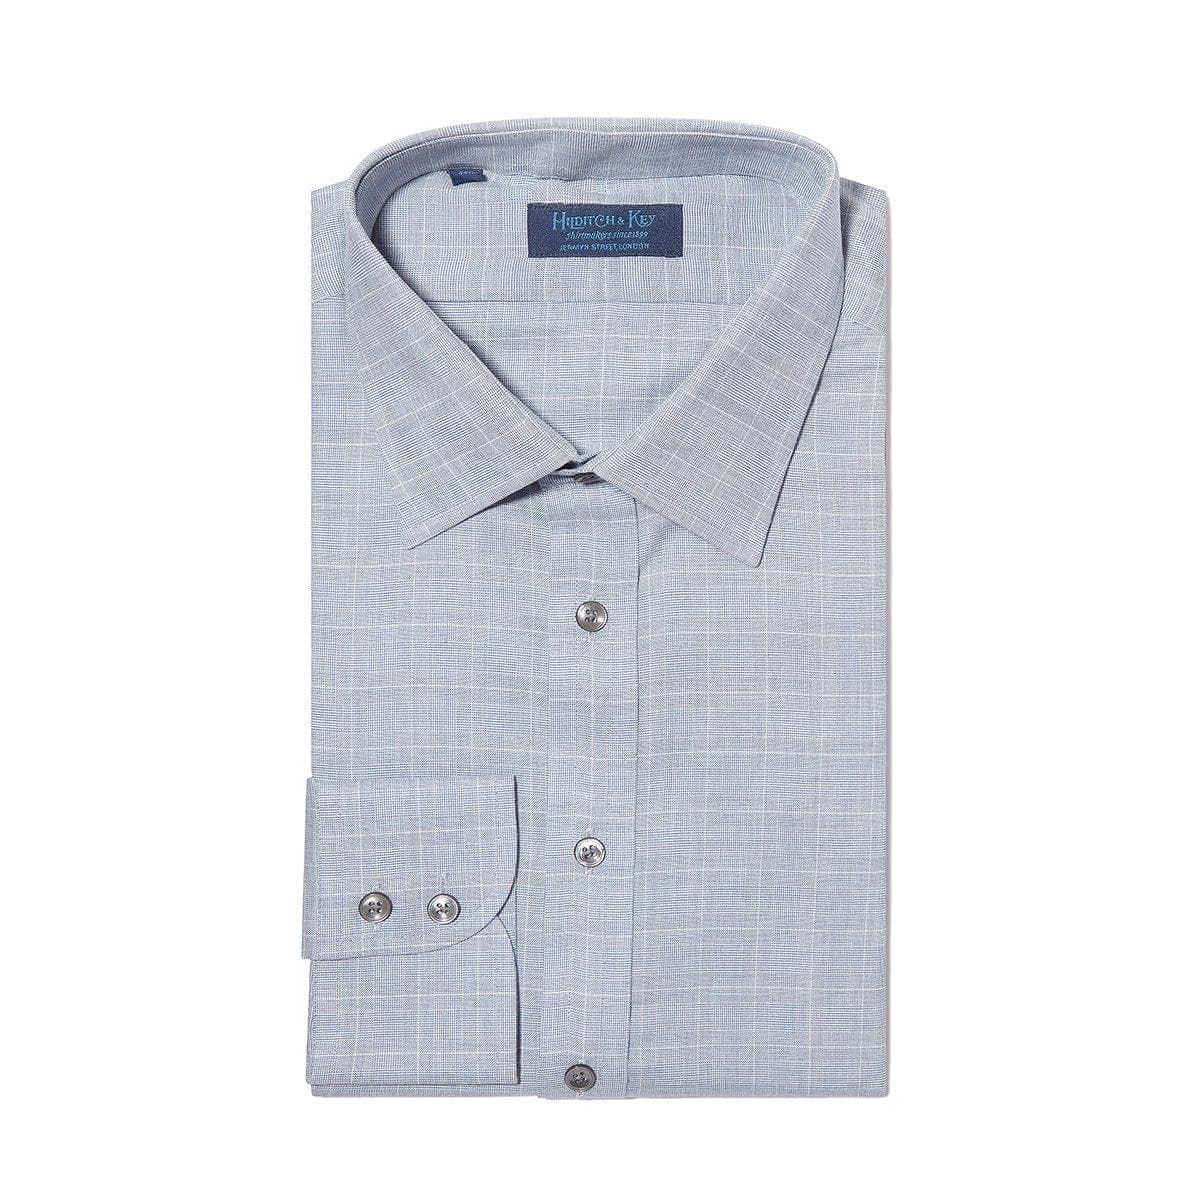 Contemporary Fit, Classic Collar, 2 Button Cuff Shirt in a Blue & White Check Twill Cotton